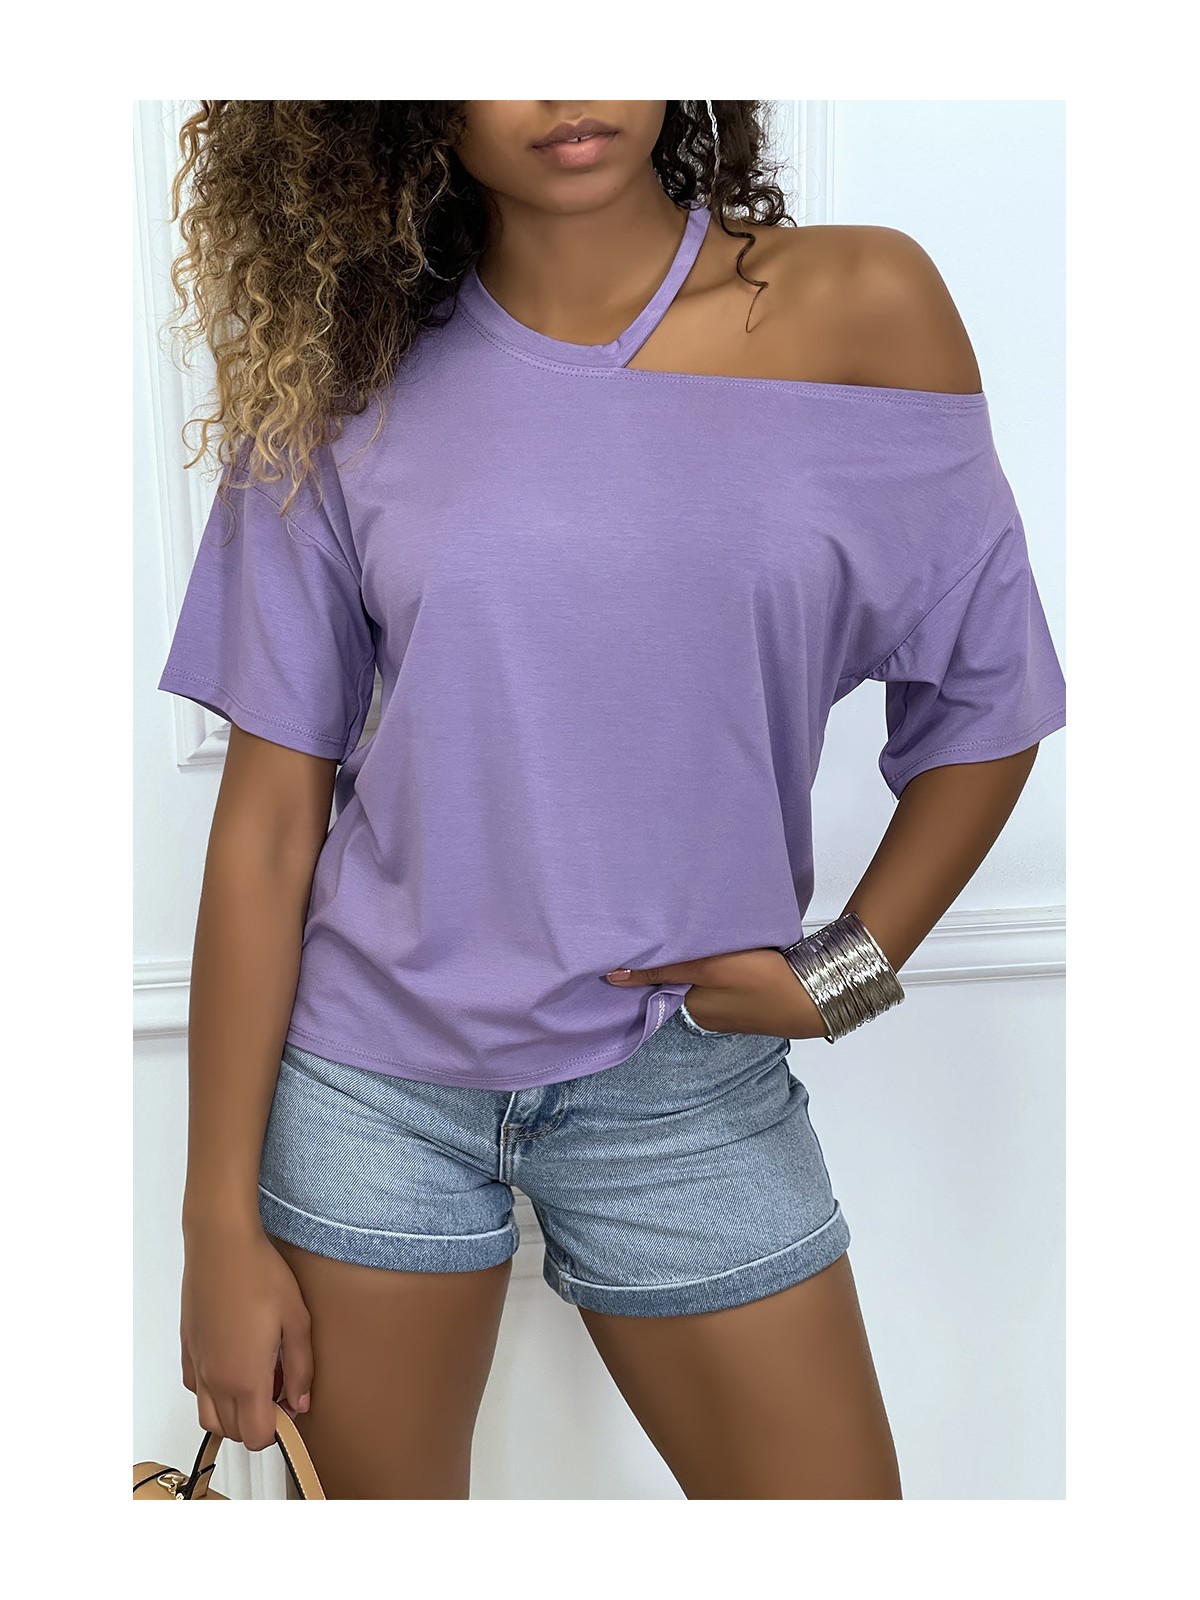 Tee-shirt lila avec epaule denudé - 5